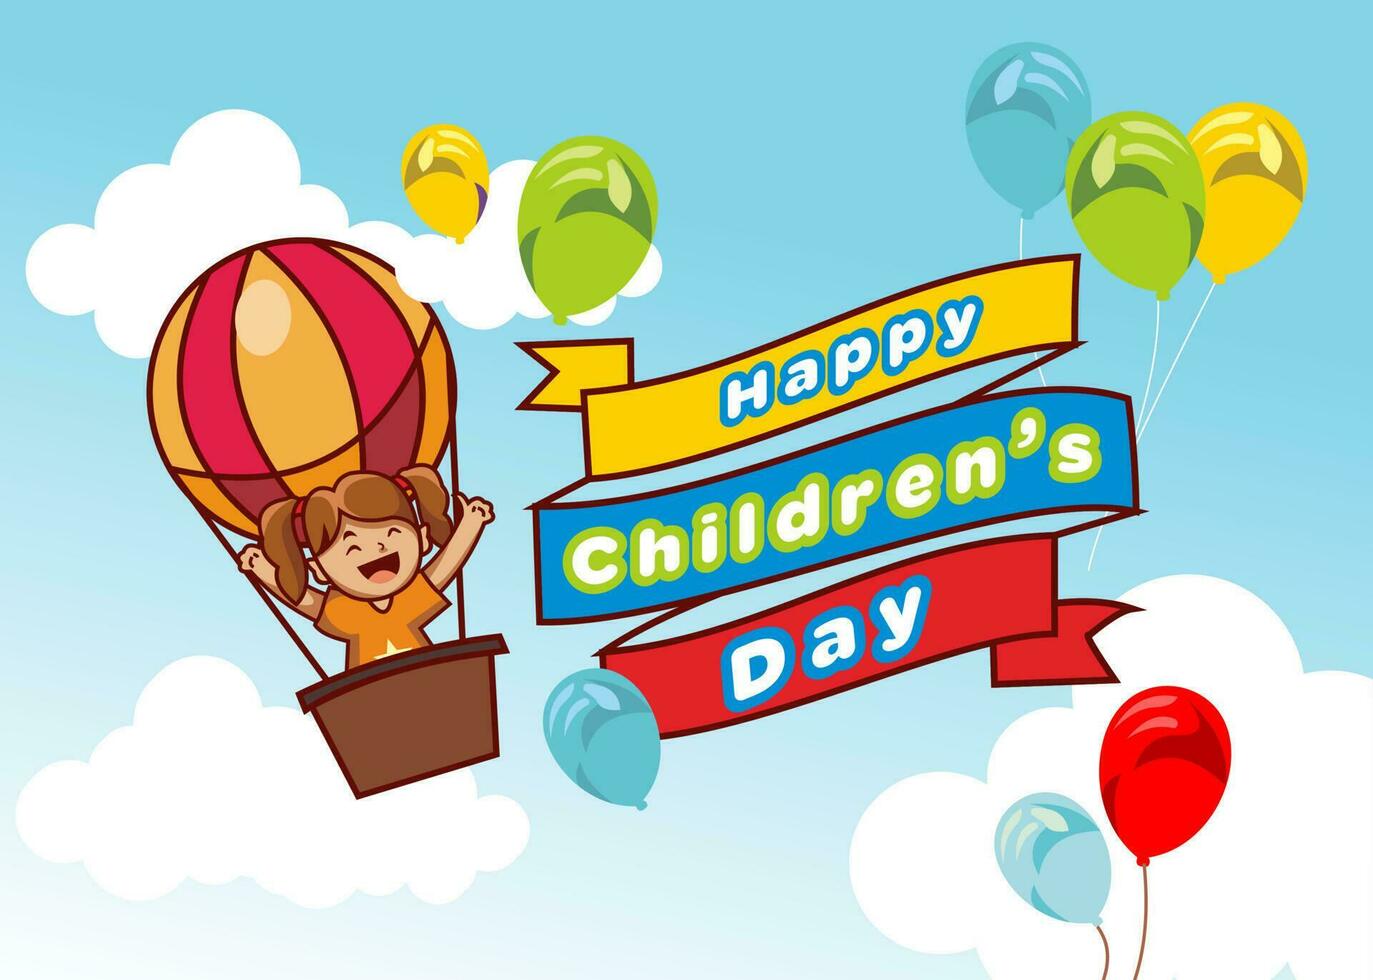 mundo para niños día póster, para niños día bandera, pequeño chico personaje, dibujos animados niña montando un caliente aire globo, dibujos animados antecedentes vector